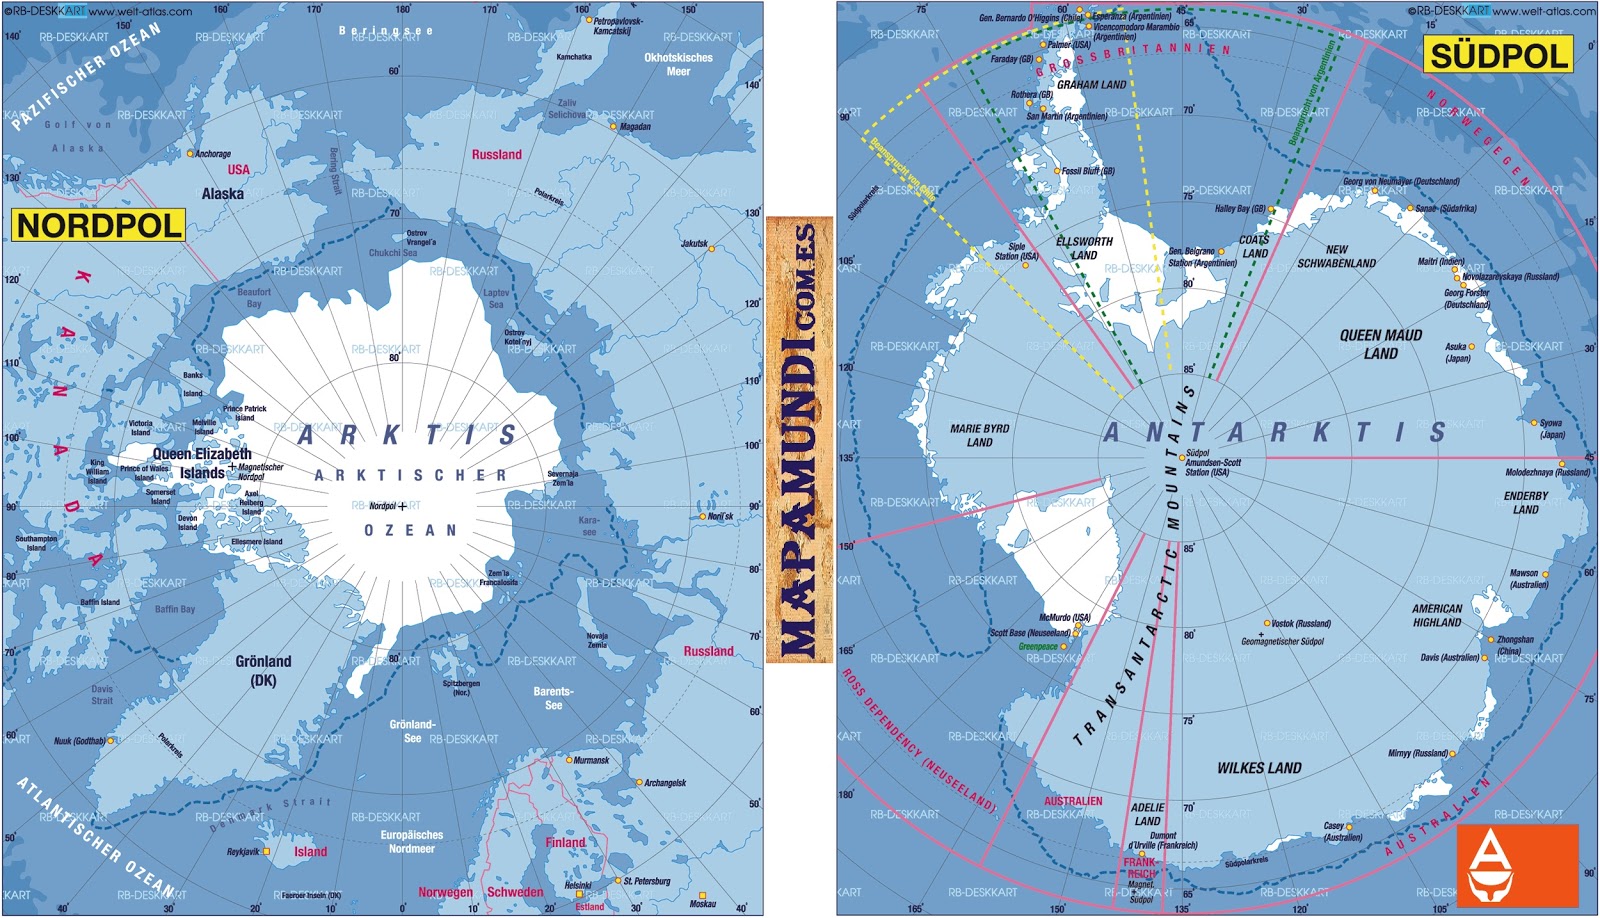 mapamundi | mapas del mundo y mucho más.: Mapamundi: Mapa del Polo